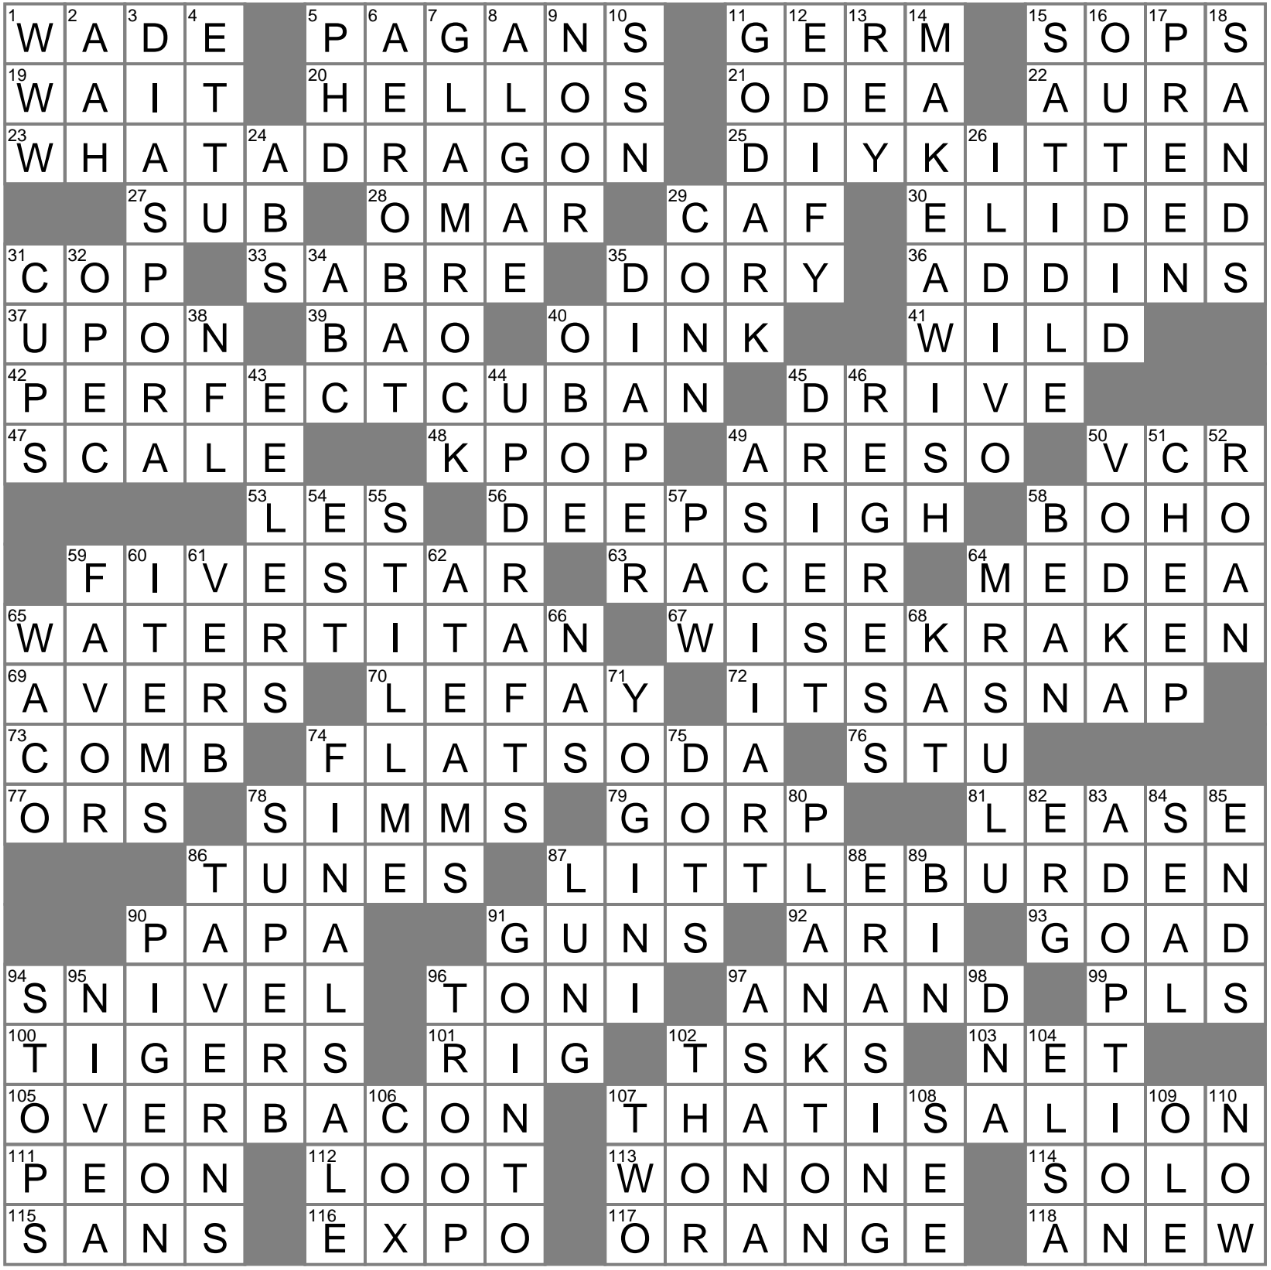 LA Times Crossword 10 Apr 22, Sunday 